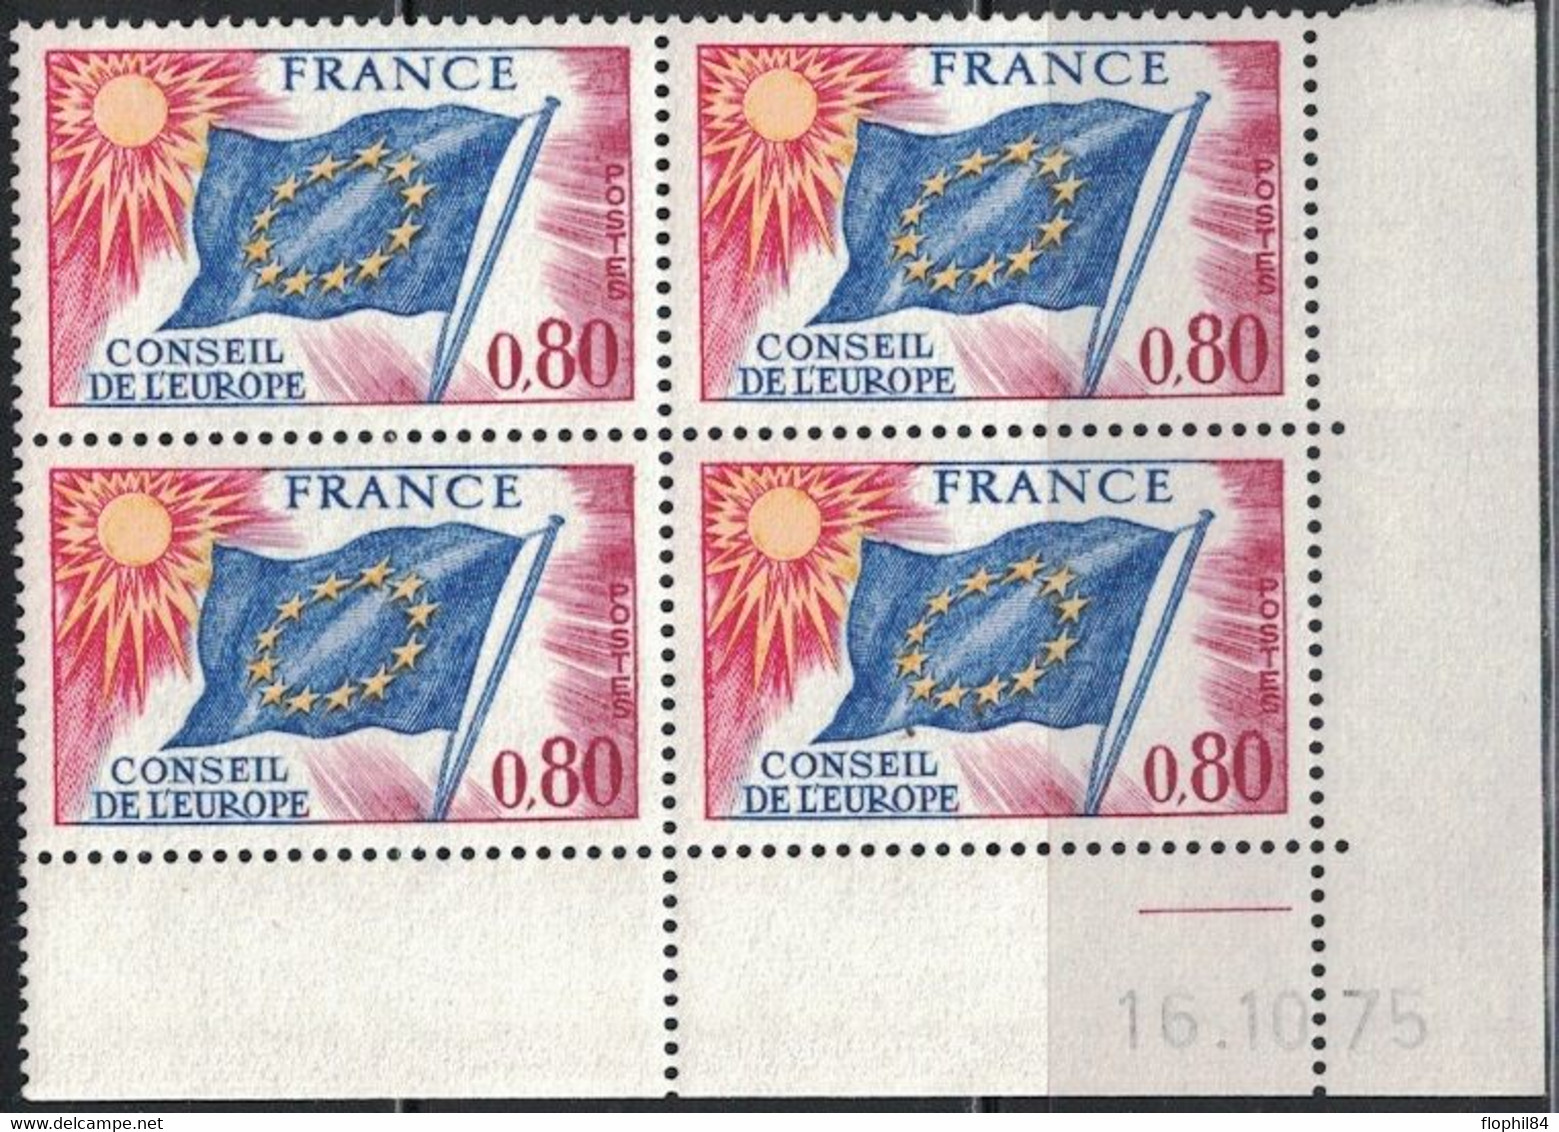 COIN DATE - SERVICE N°47 - 0f80 - CONSEIL DE L'EUROPE - 16-10-1975 - Cote 10€. - Dienstmarken